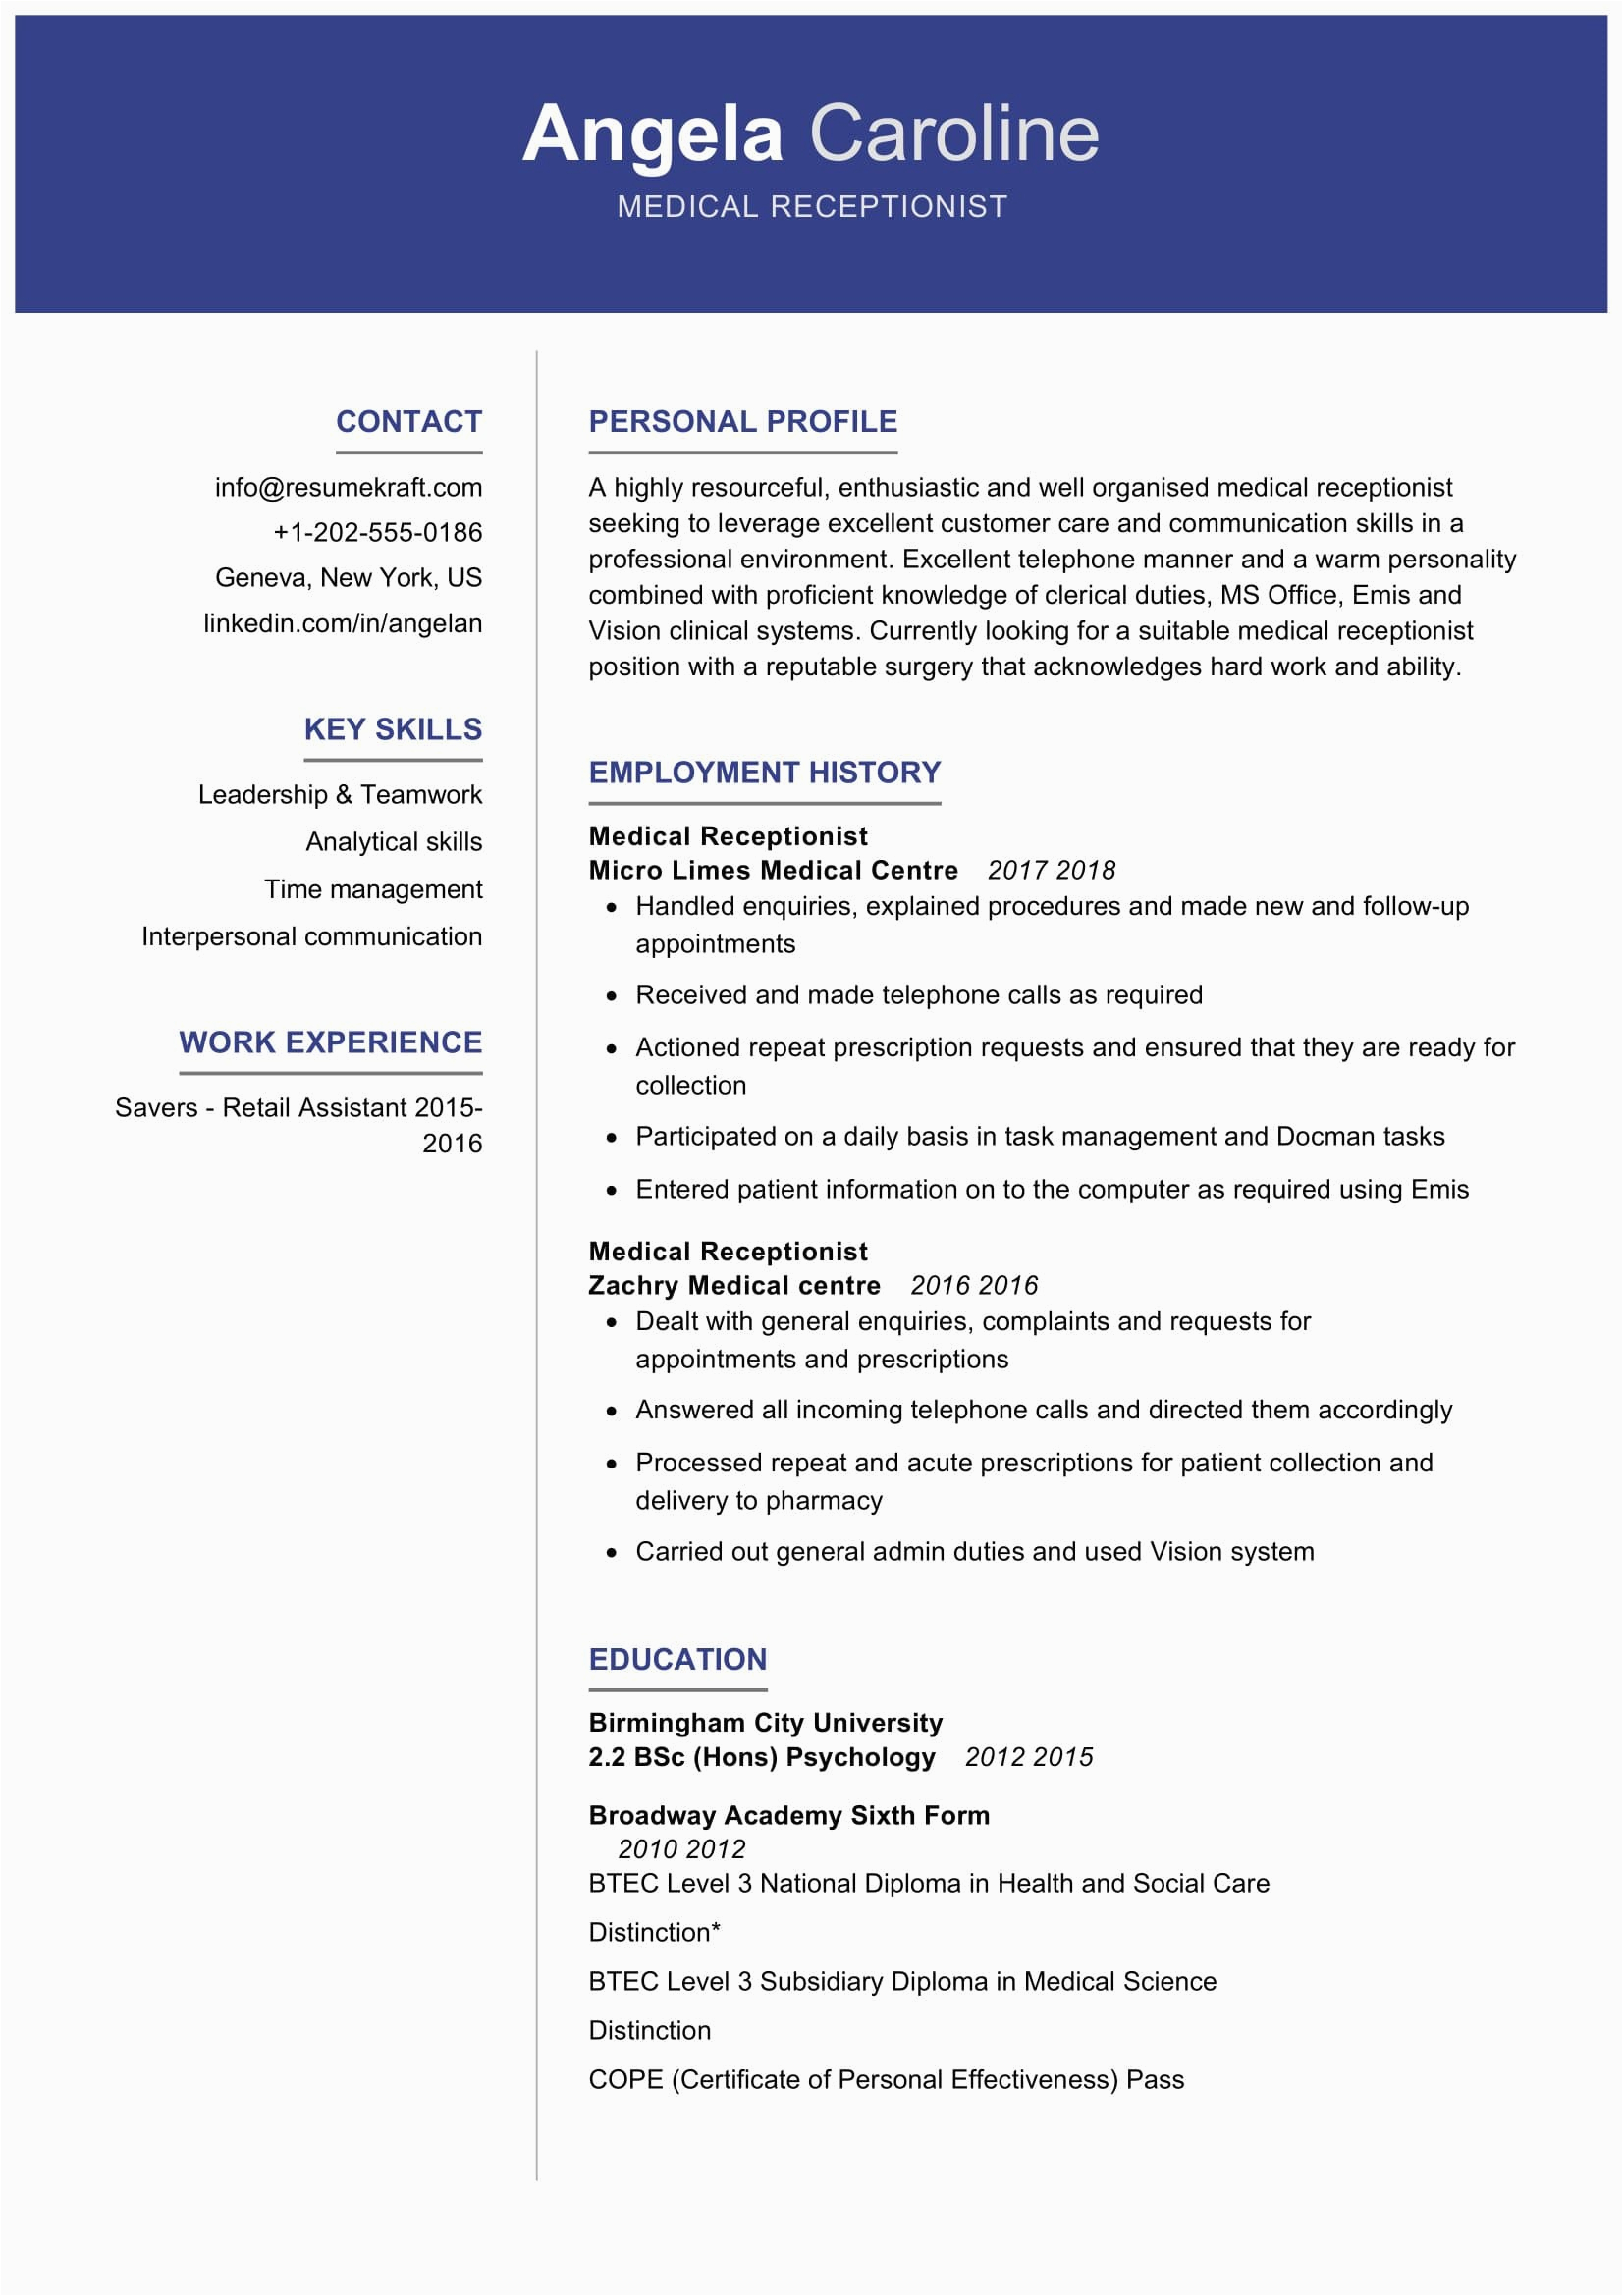 Free Resume Samples for Medical Receptionist Medical Receptionist Resume Sample 2021 Resumekraft